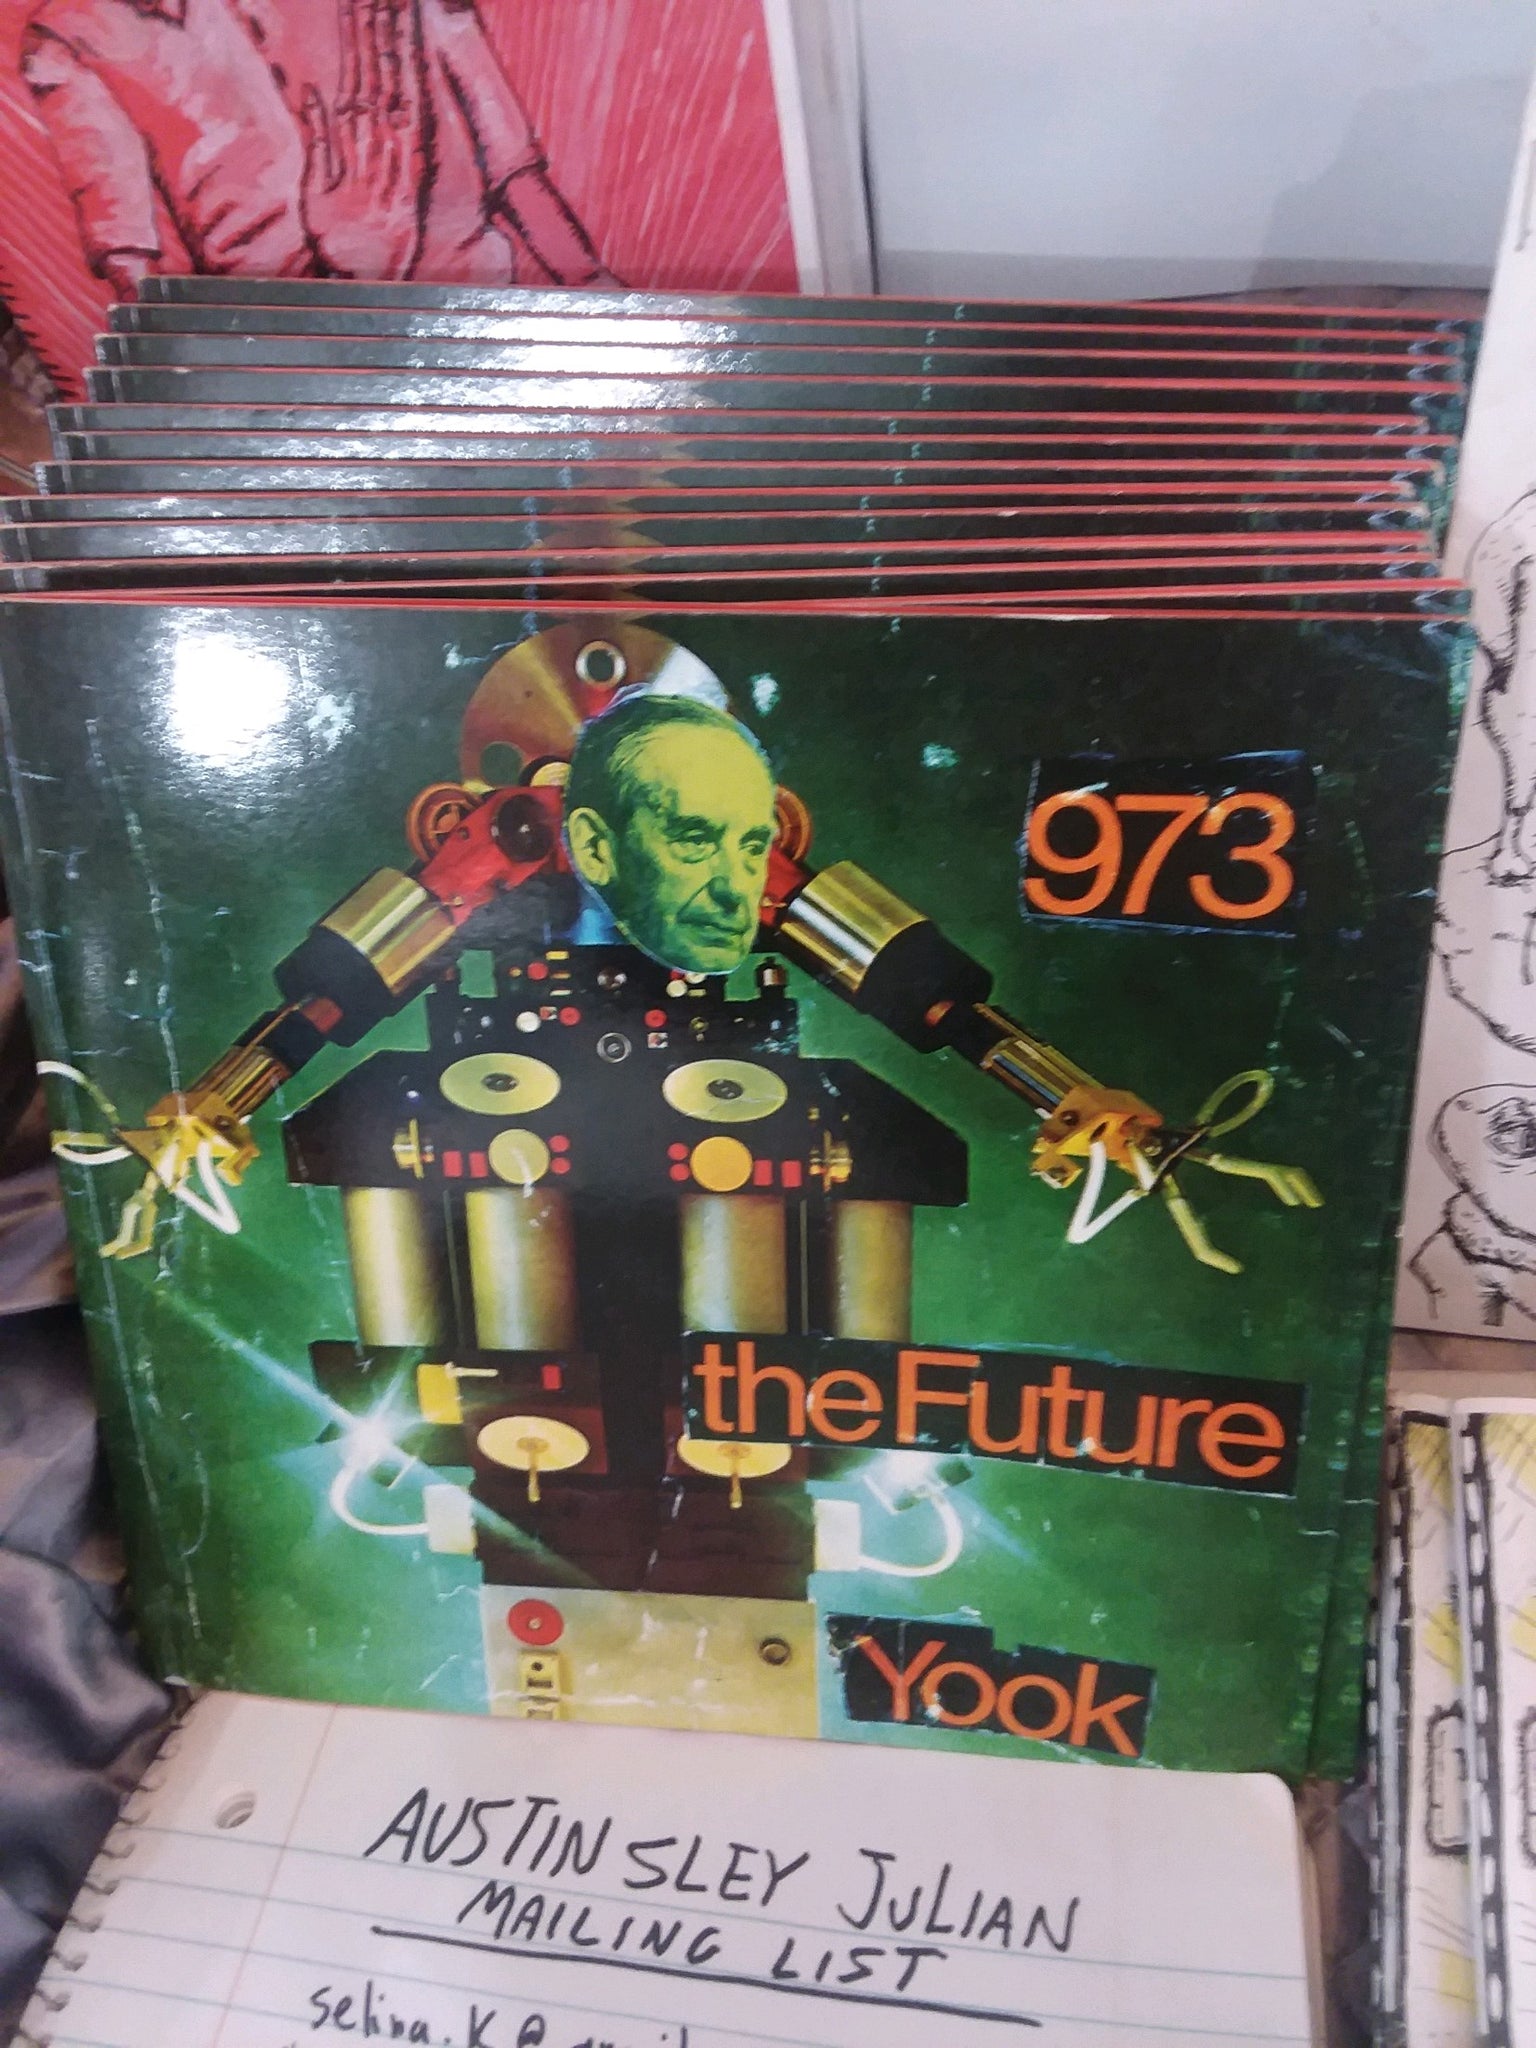 Austin Julian, "973 Future yook"